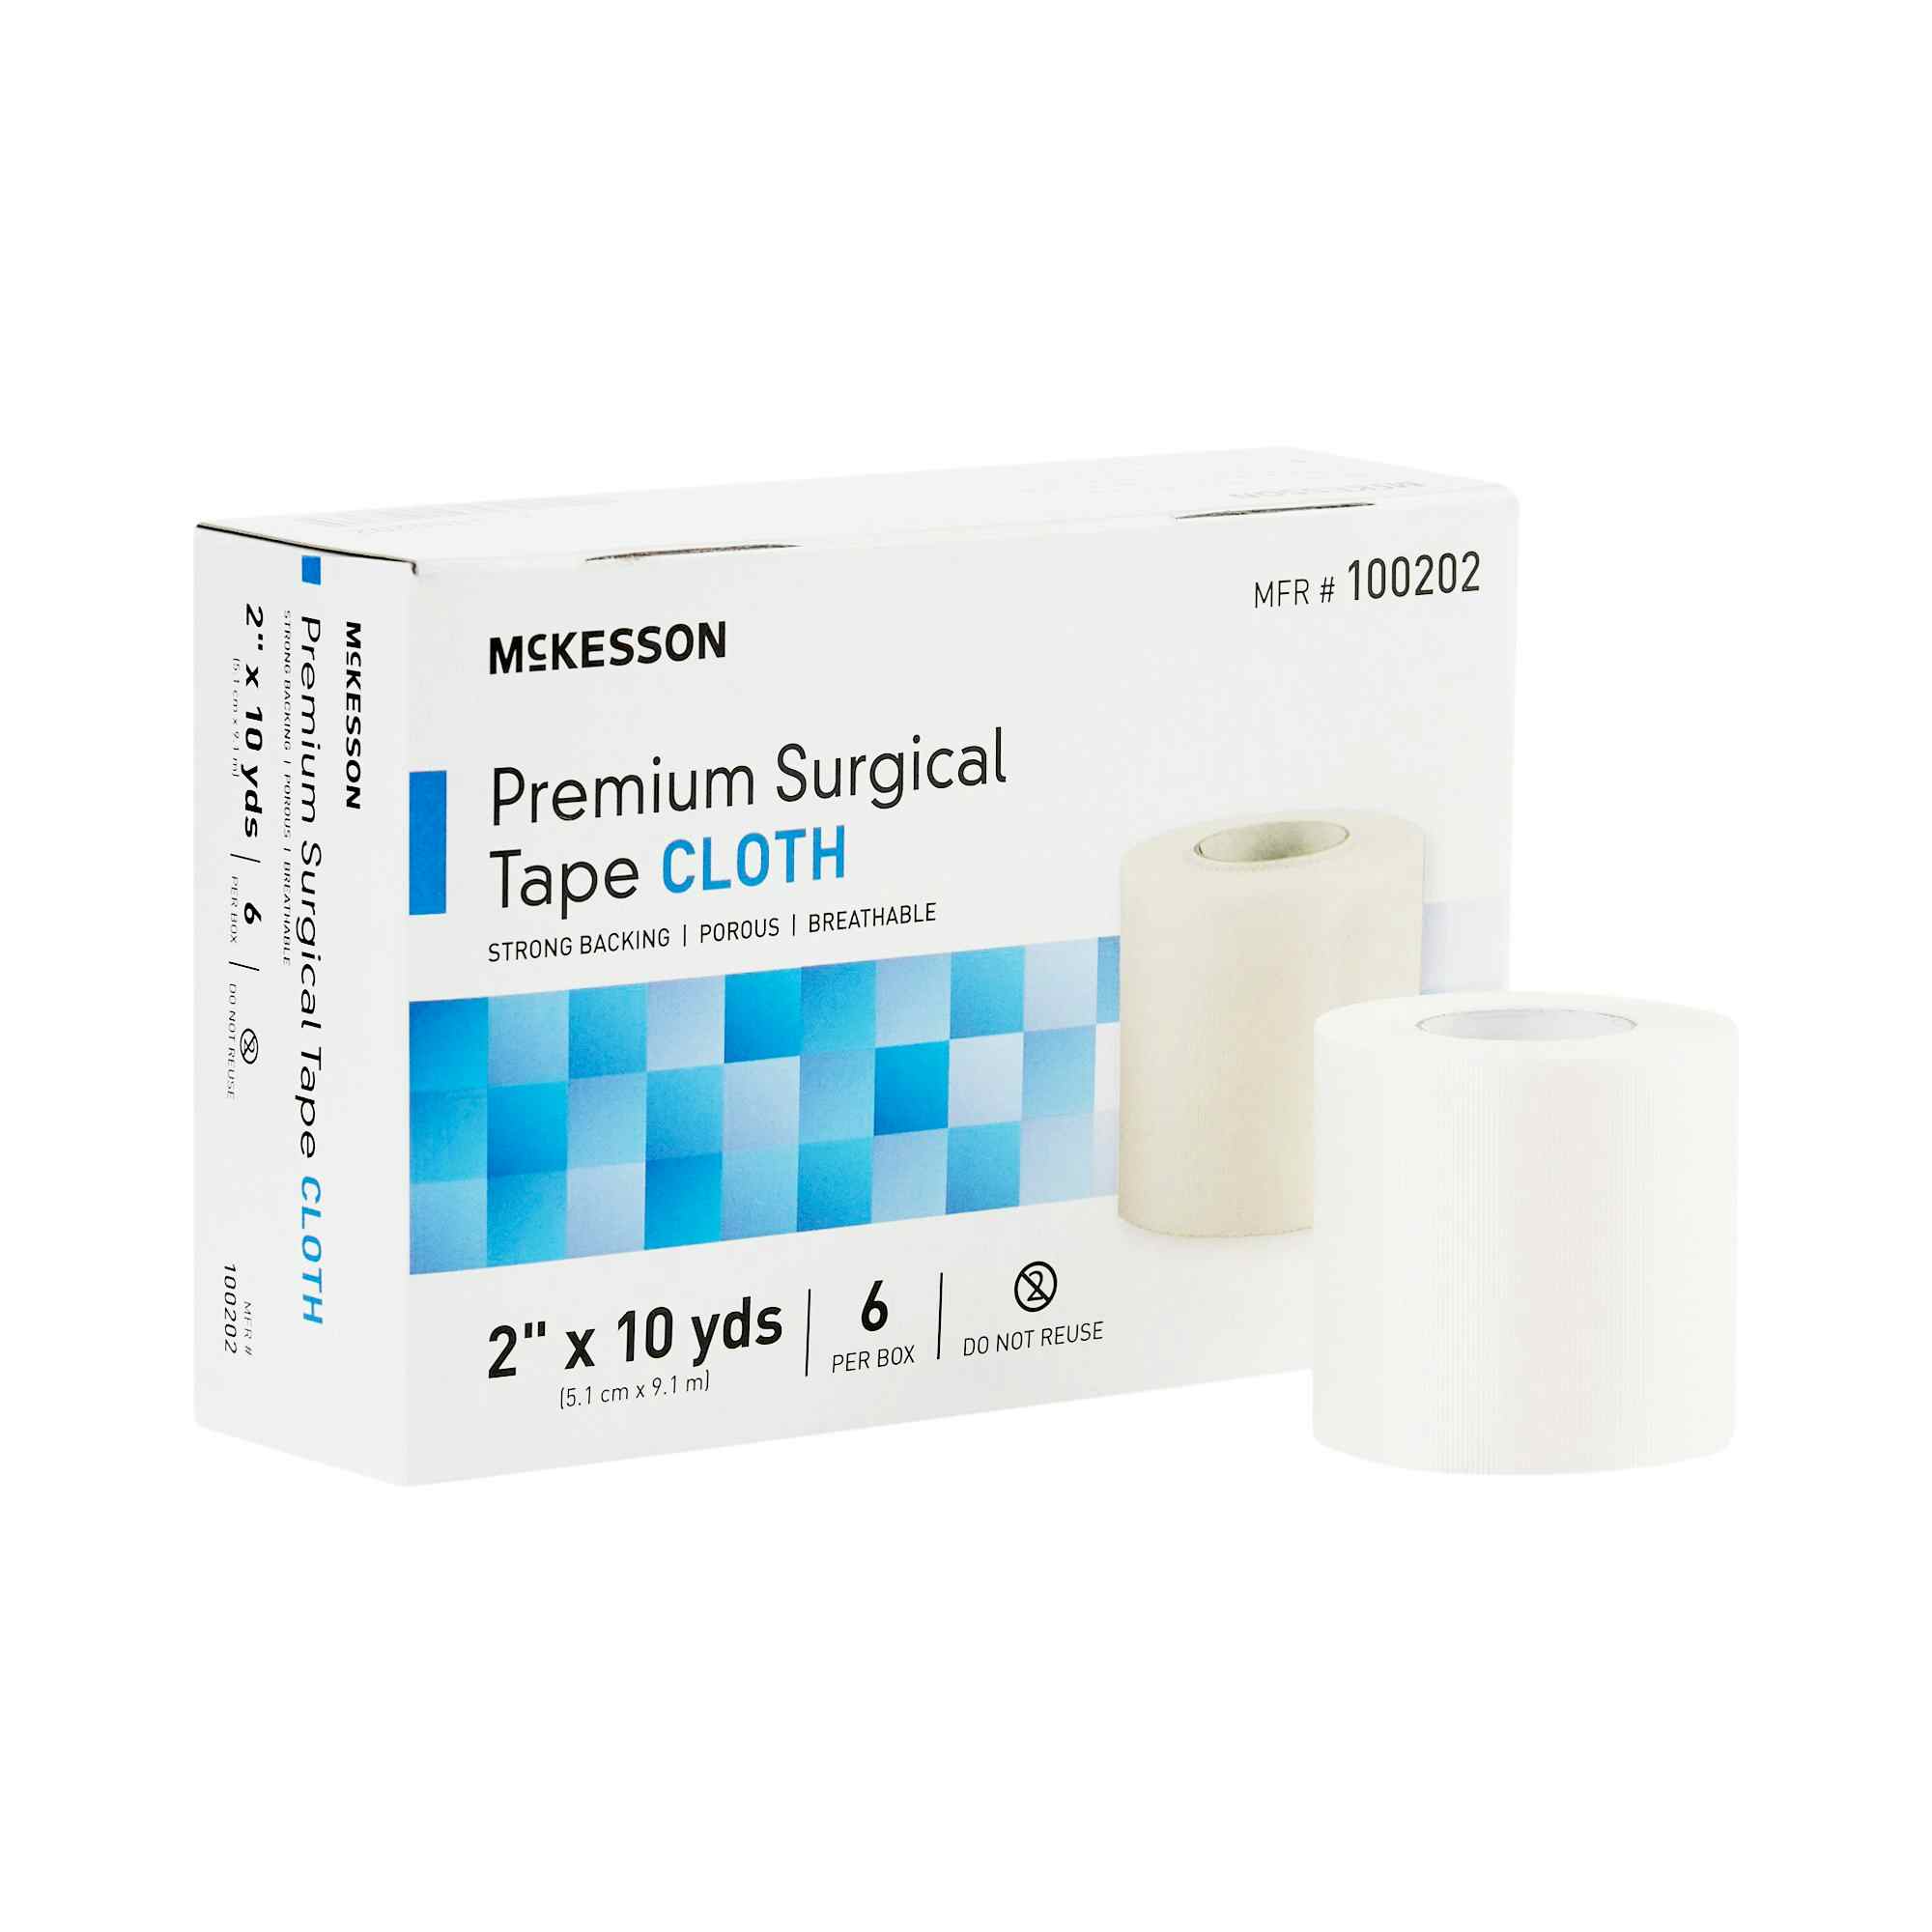 McKesson Premium Surgical Tape Cloth, 2" X 10 yds, 100202, Box of 6